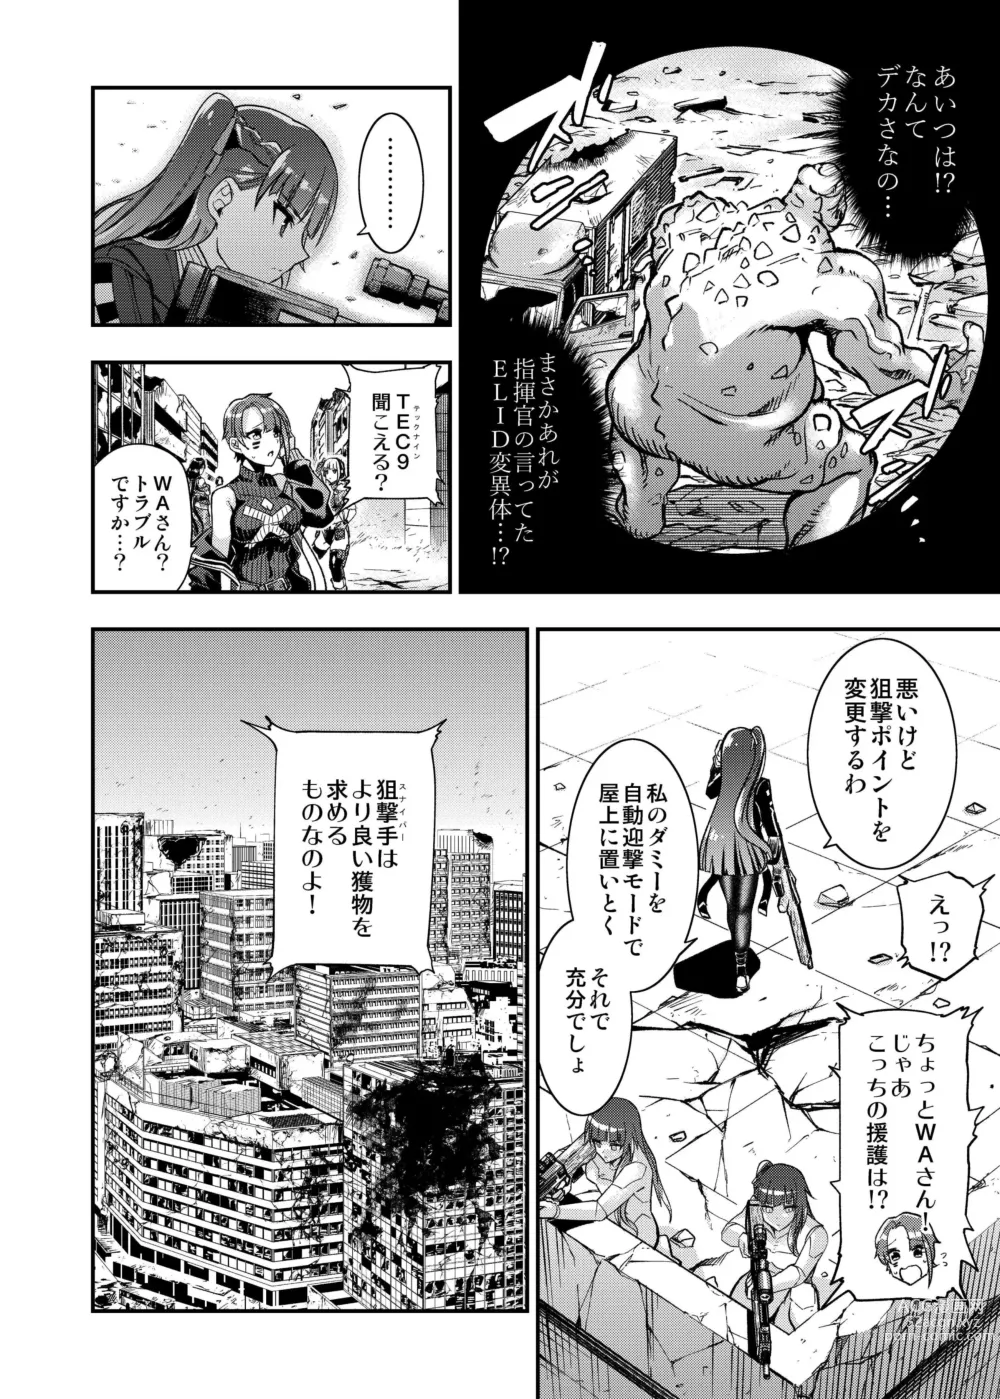 Page 7 of doujinshi Marunomare Wa-chan